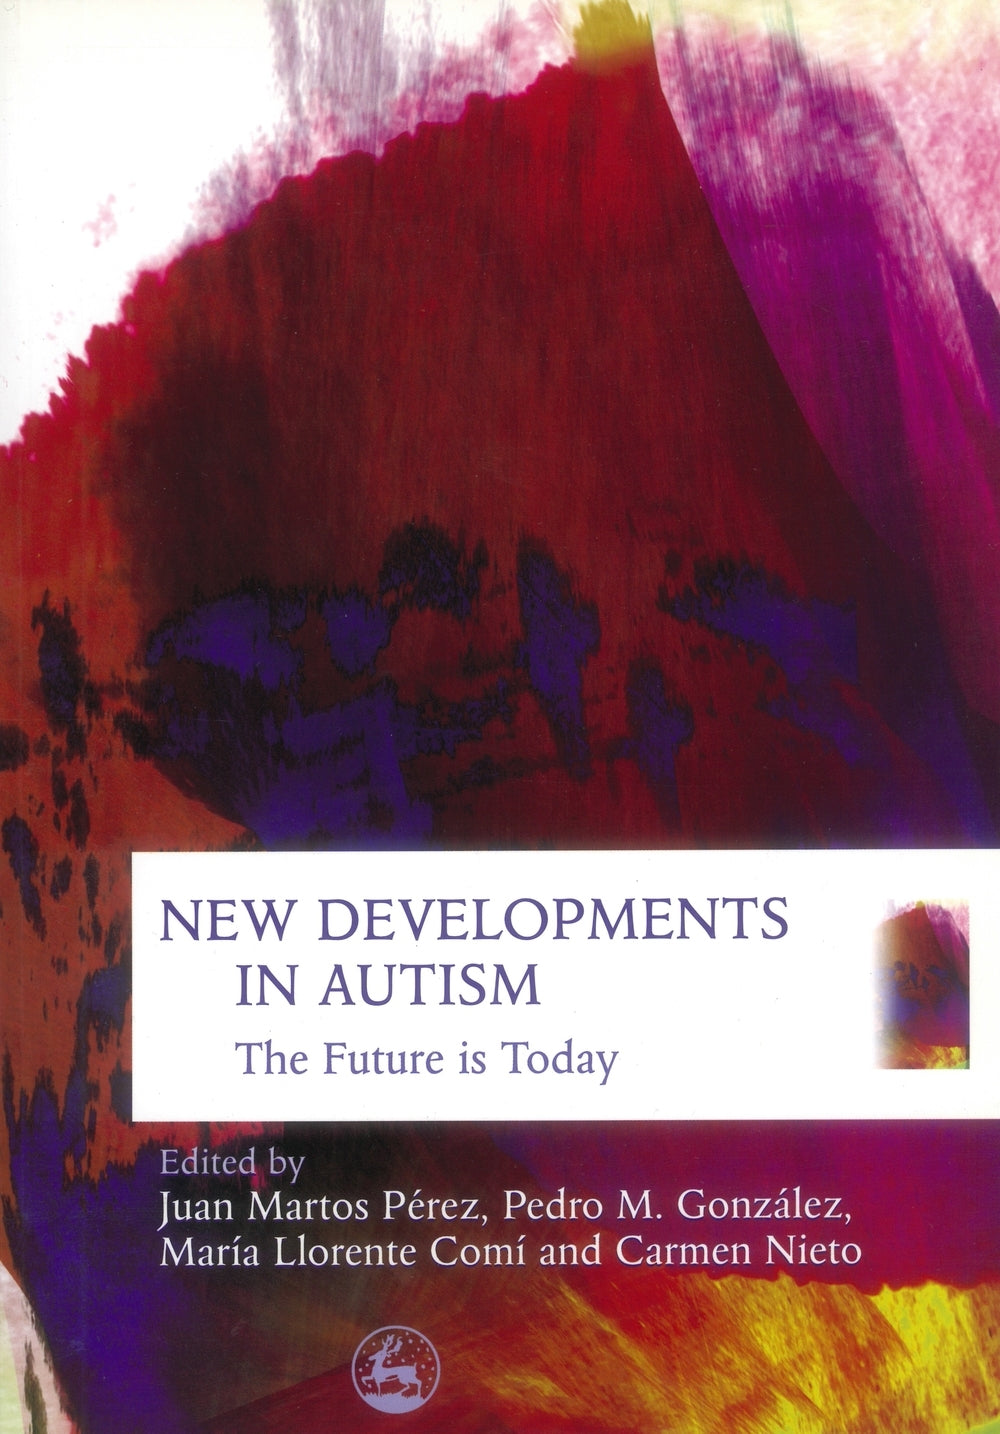 New Developments in Autism by Juan Marto Perez, Pedro M. Gonzalez, Maria Llorente Comi, Carmen Nieto Vizcaino, No Author Listed